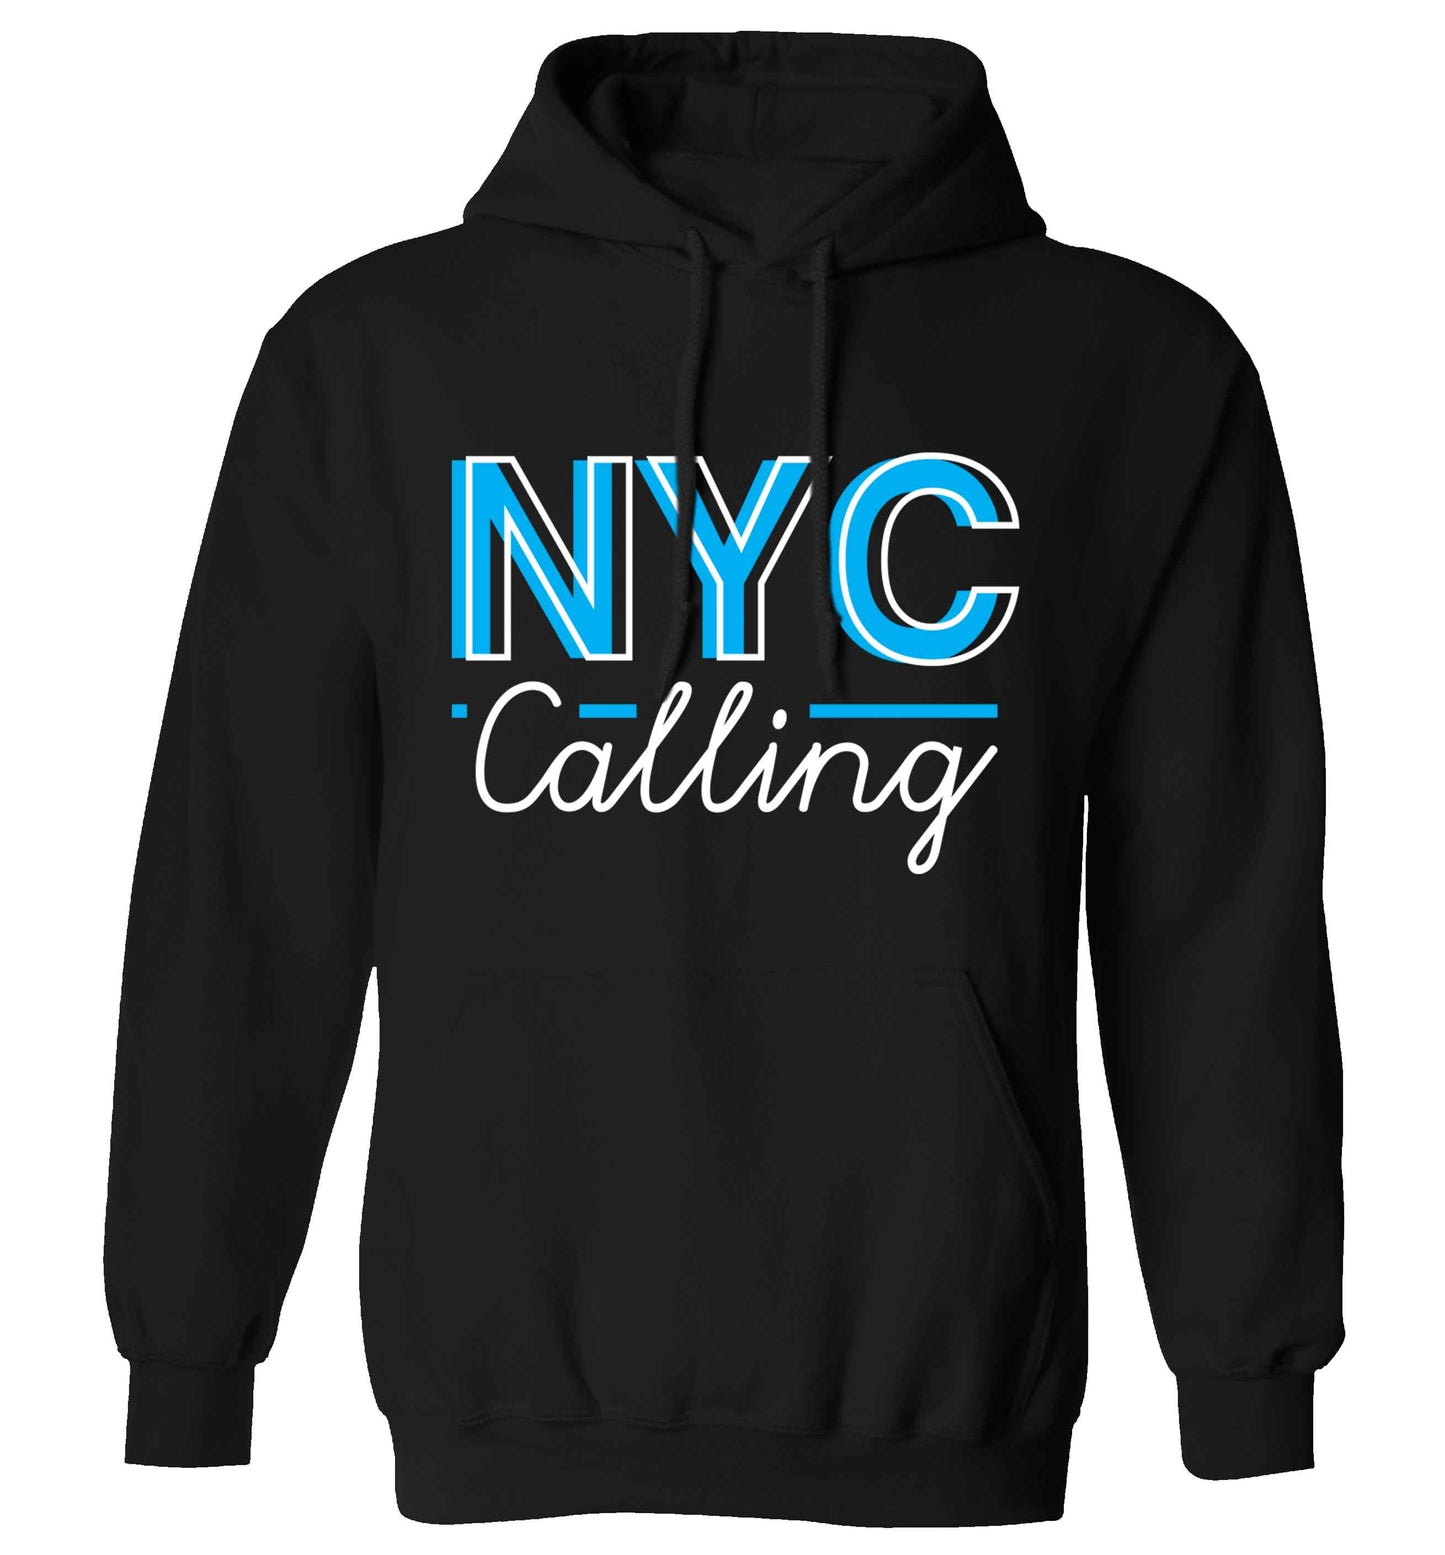 NYC calling adults unisex black hoodie 2XL